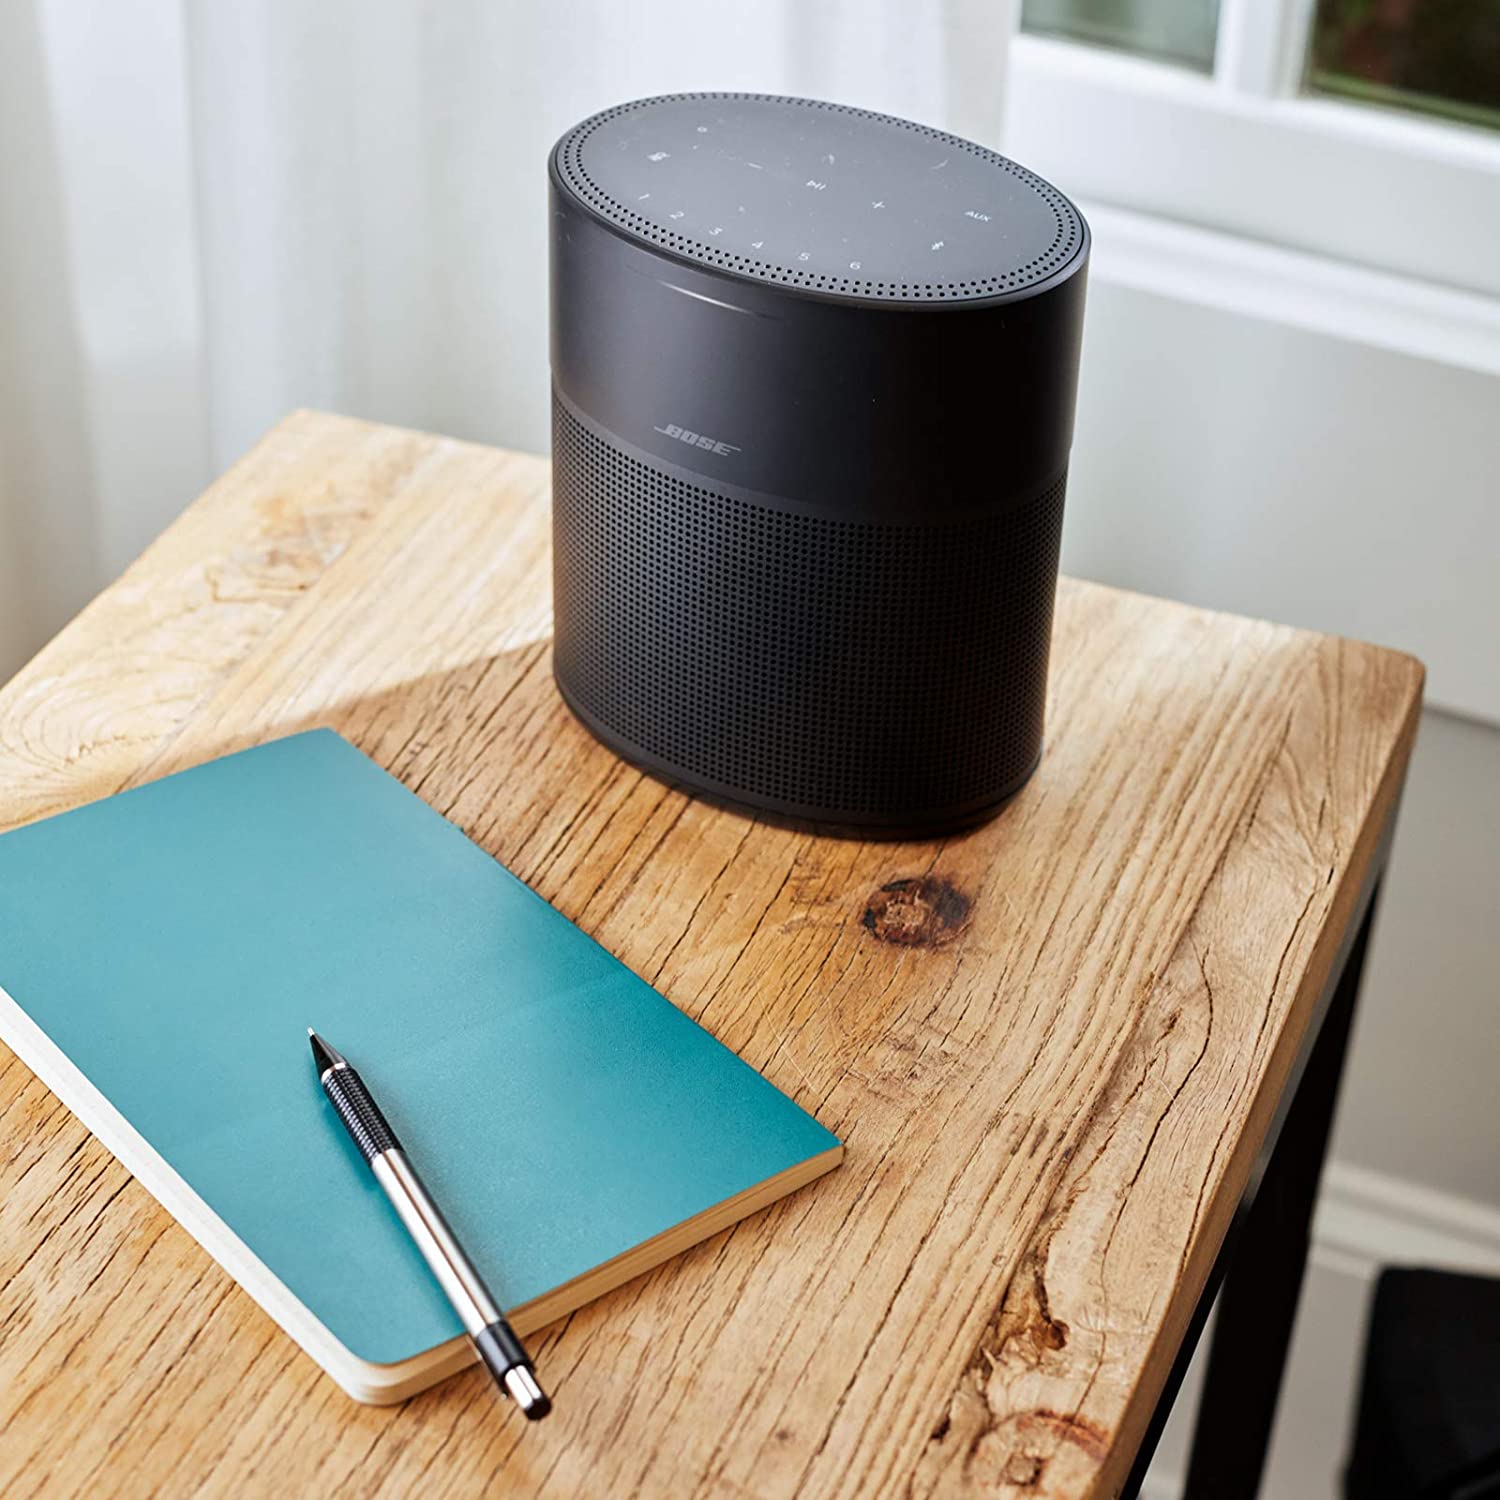 Bose Home Speaker 300, with Amazon Alexa Built-in, Black